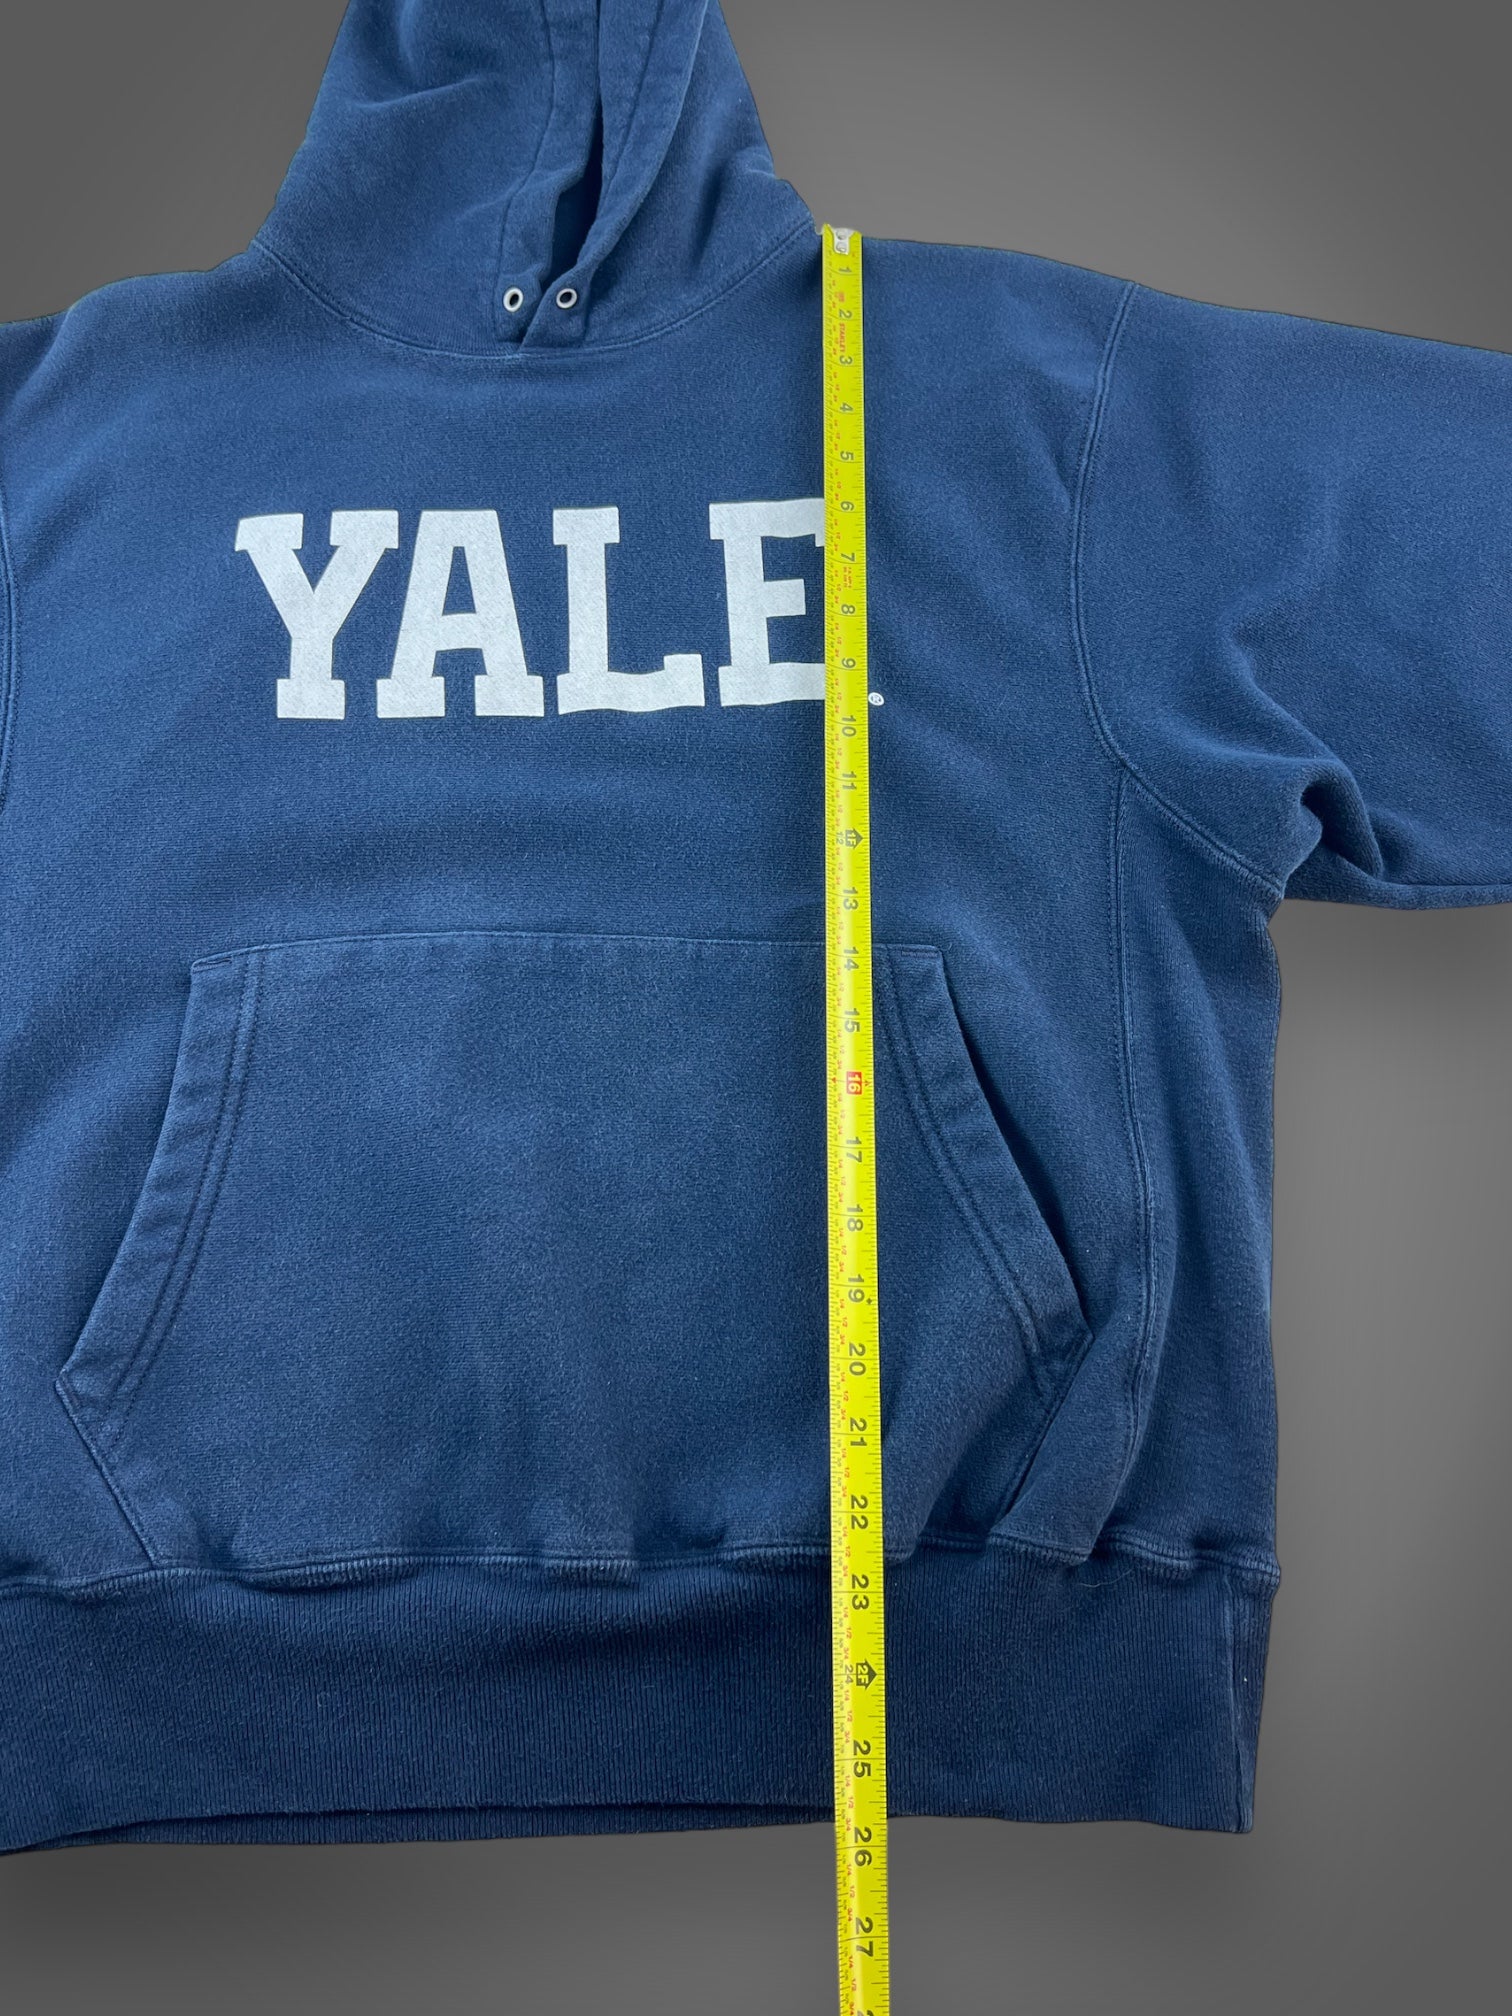 00s Champion Yale reverse weave hooded sweatshirt fits L